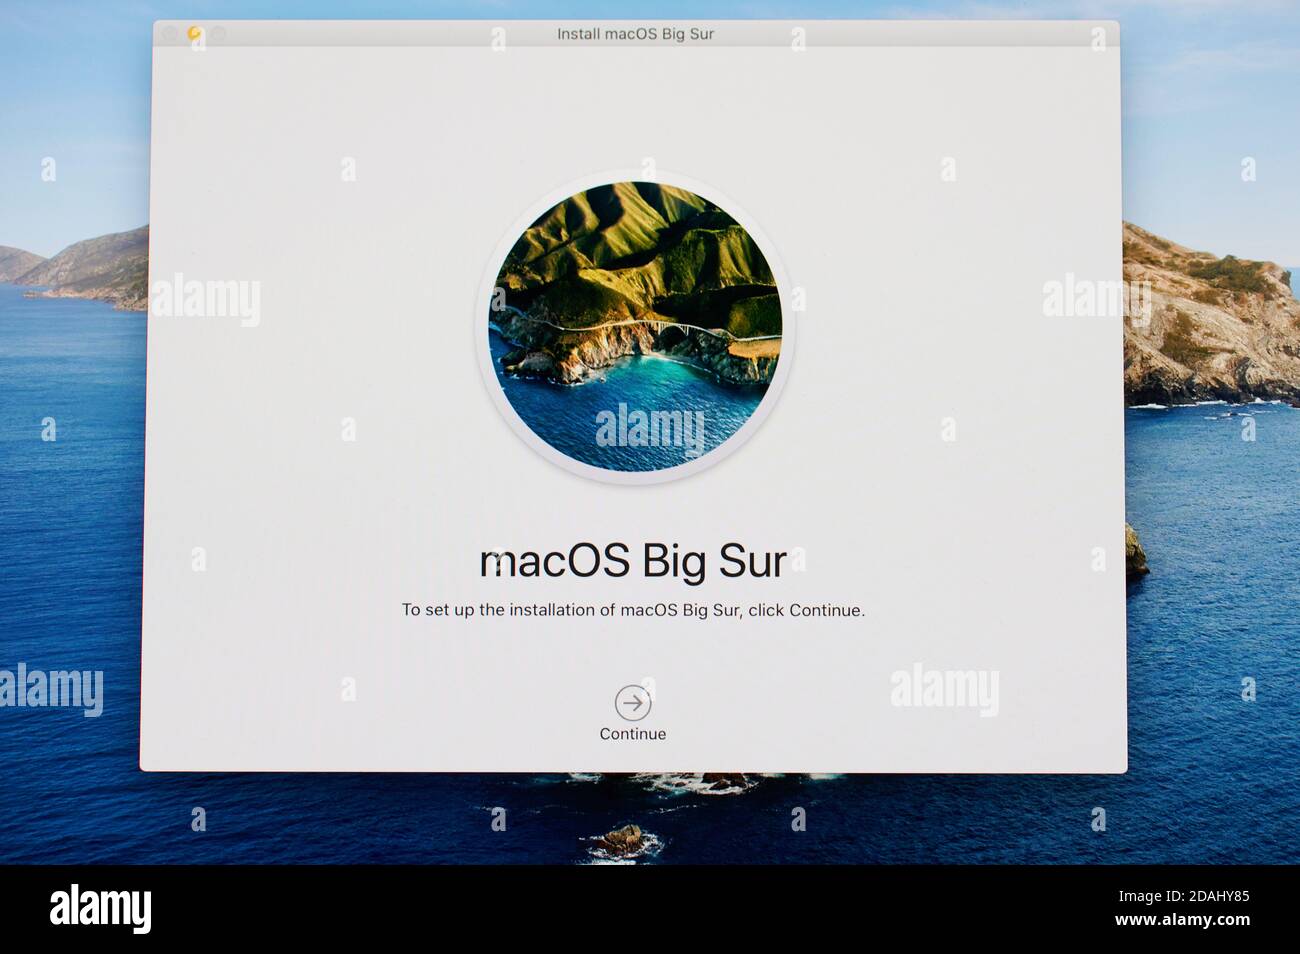 New york, USA - November 13, 2020: Install macos Big Sur on screen display close up view Stock Photo